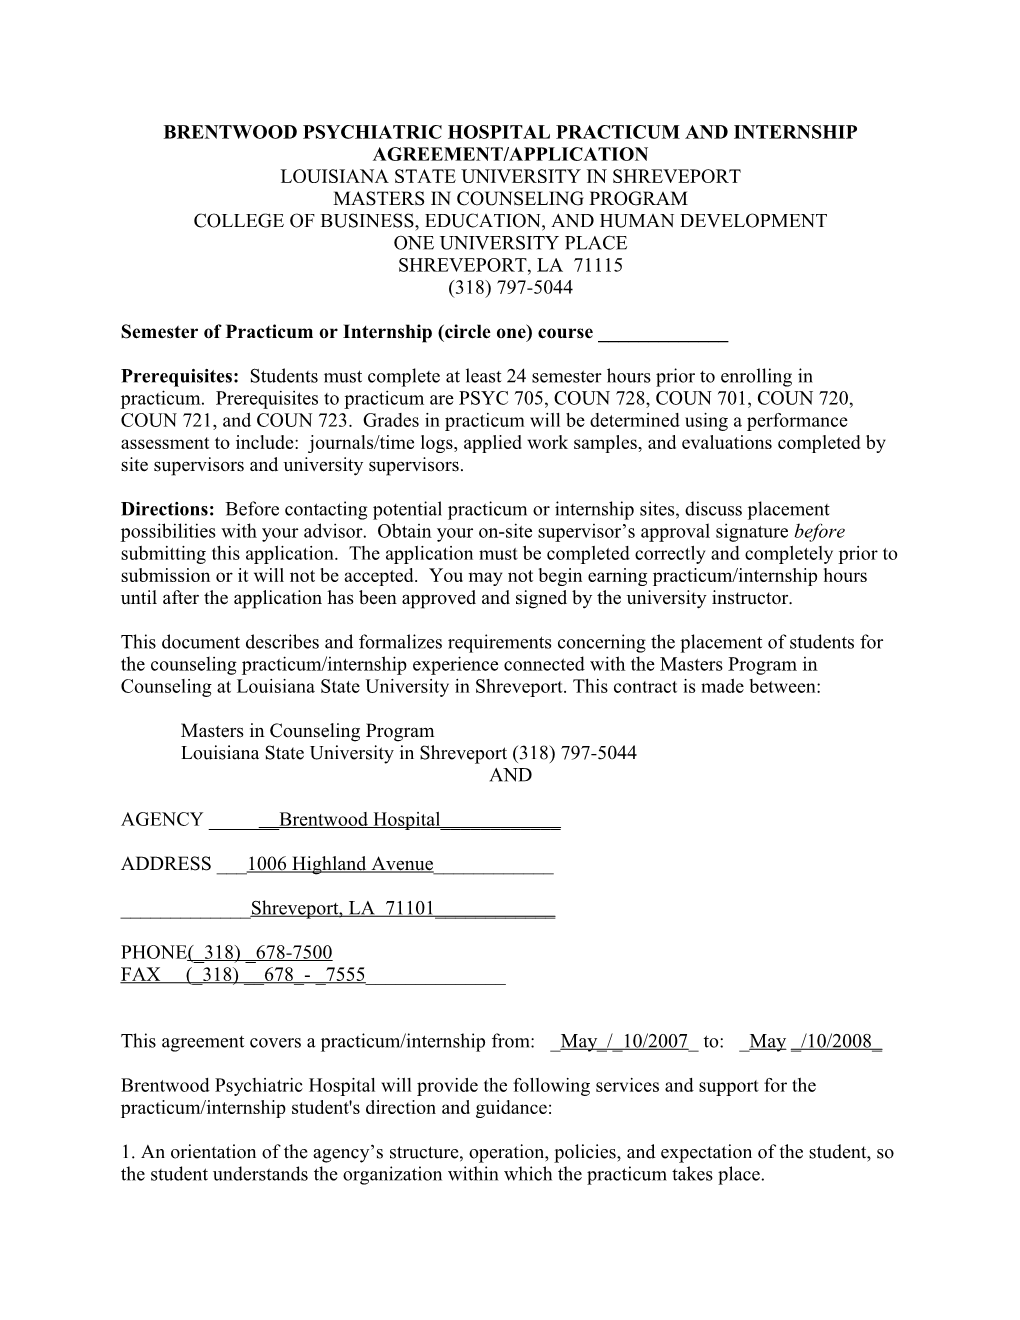 Brentwood Psychiatric Hospital Practicum and Internship Agreement/Application